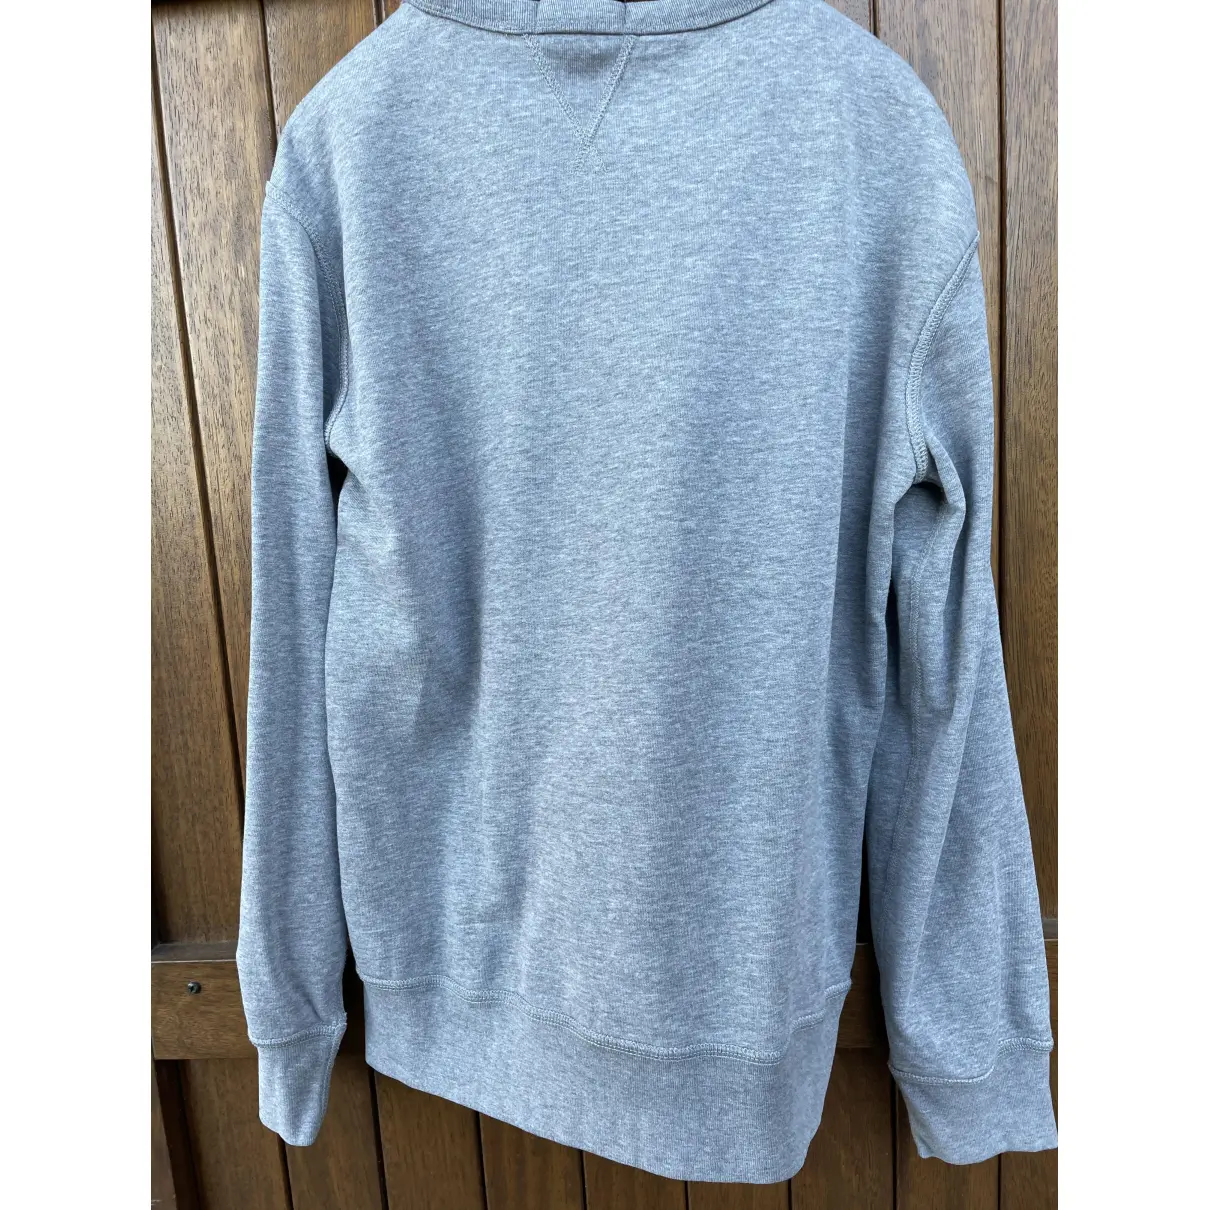 Buy Polo Ralph Lauren Grey Cotton Knitwear & Sweatshirt online